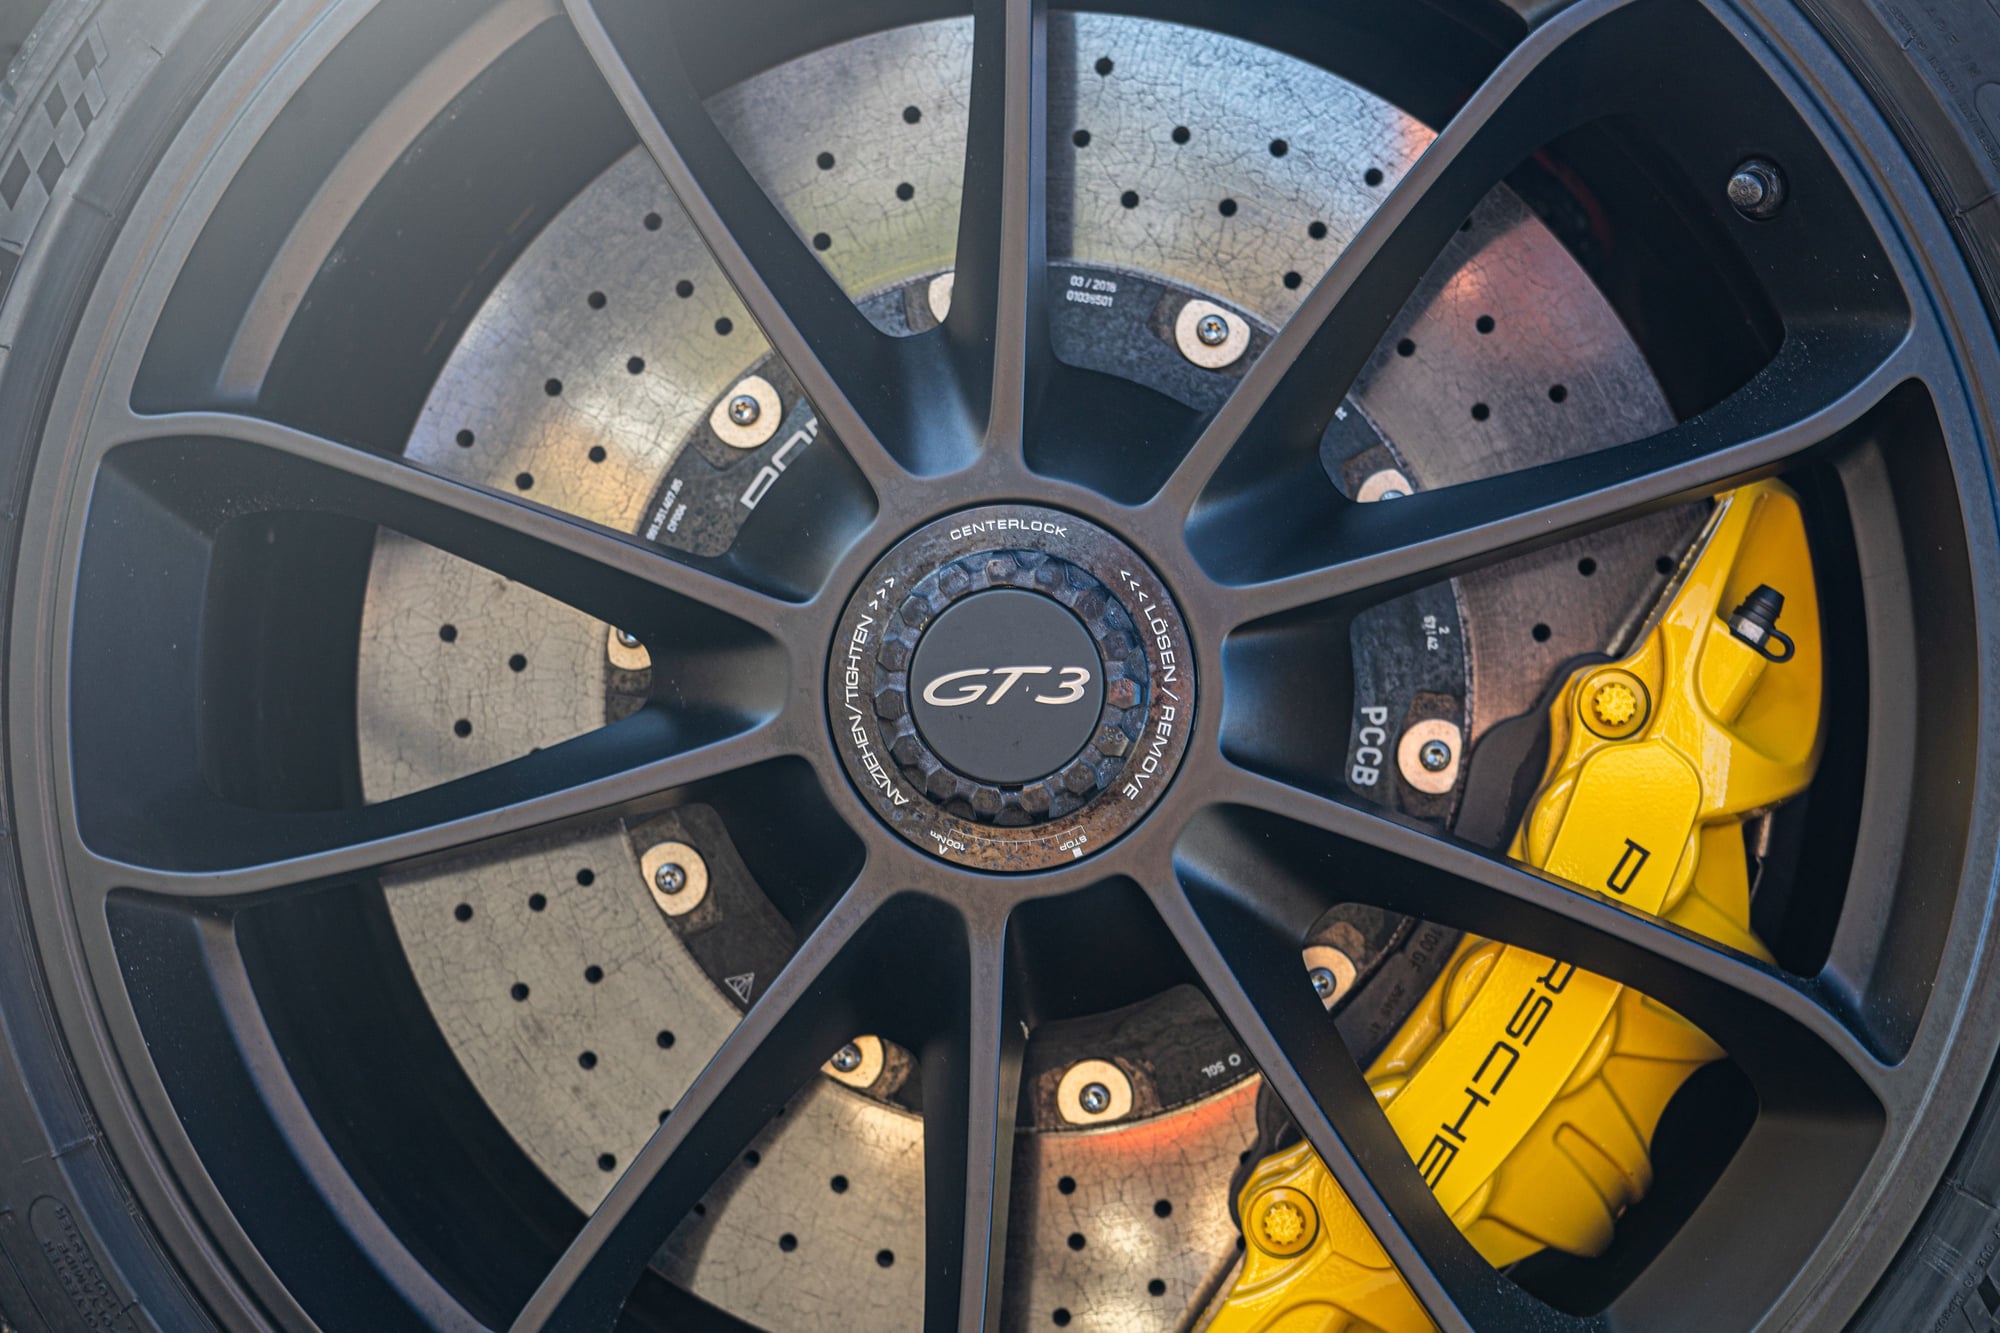 2018 Porsche GT3 - 2018 Porsche GT3 - CPO, PTS, Manual, Buckets, Ceramics - Used - VIN WP0AC2A90JS175584 - 15,750 Miles - 6 cyl - 2WD - Manual - Coupe - Gray - Richmond, VA 23114, United States